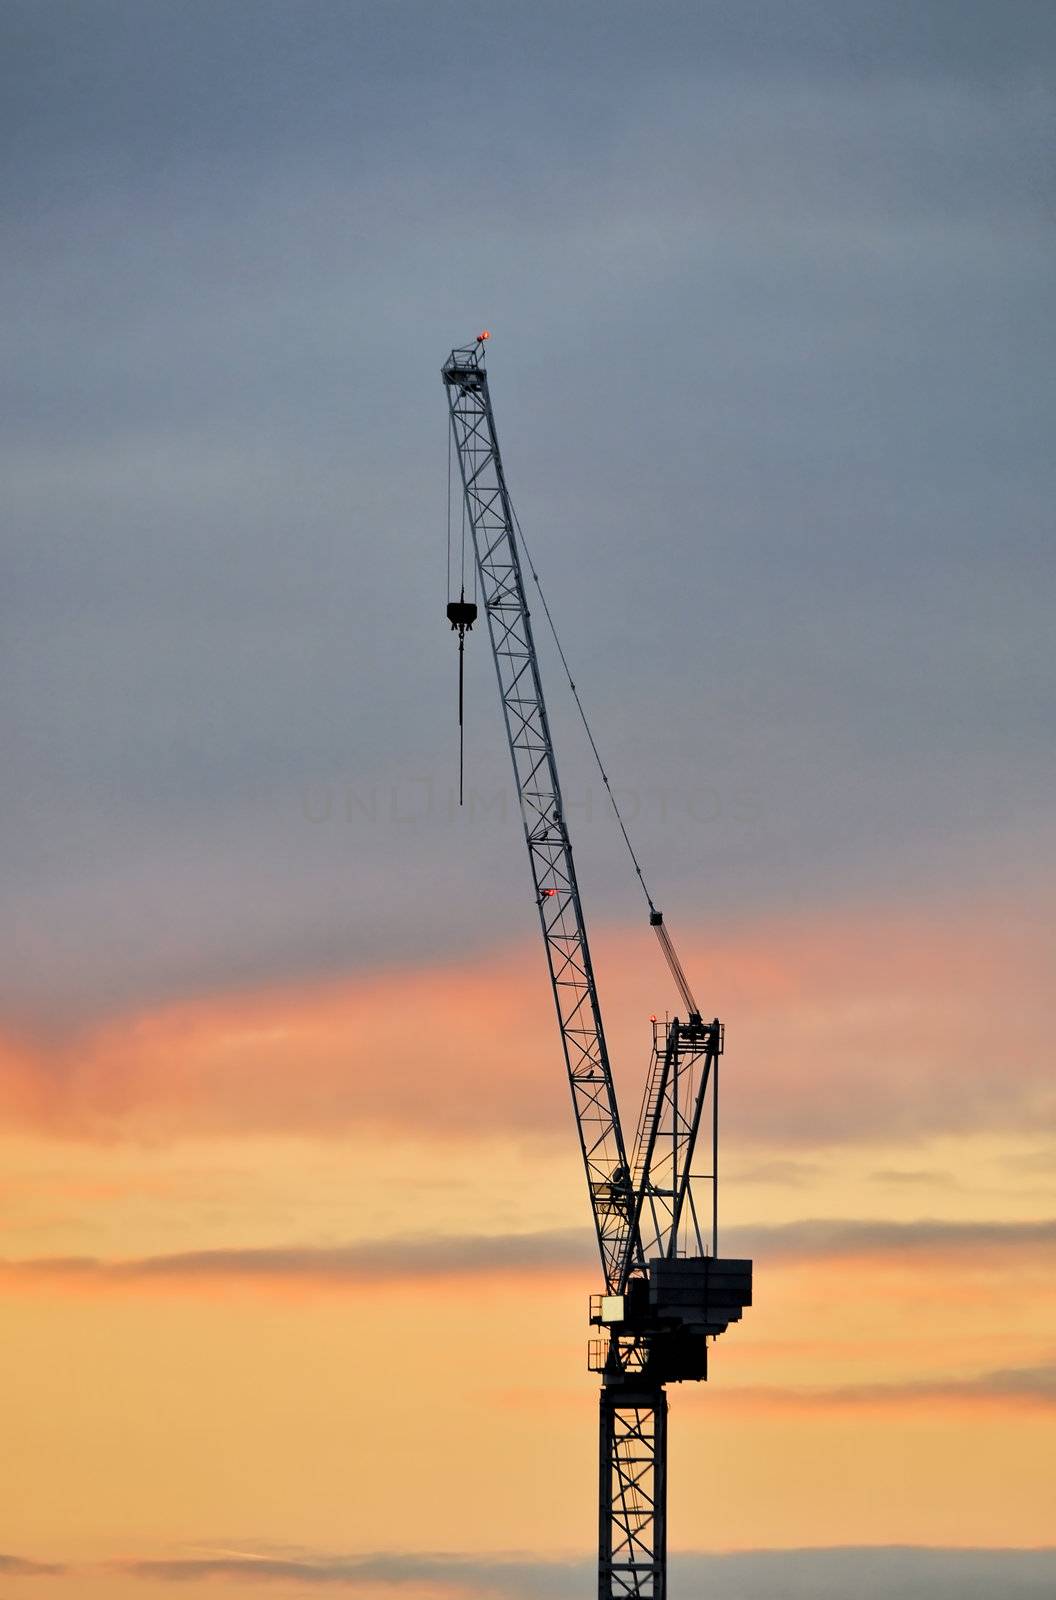 Crane at sunset by dutourdumonde